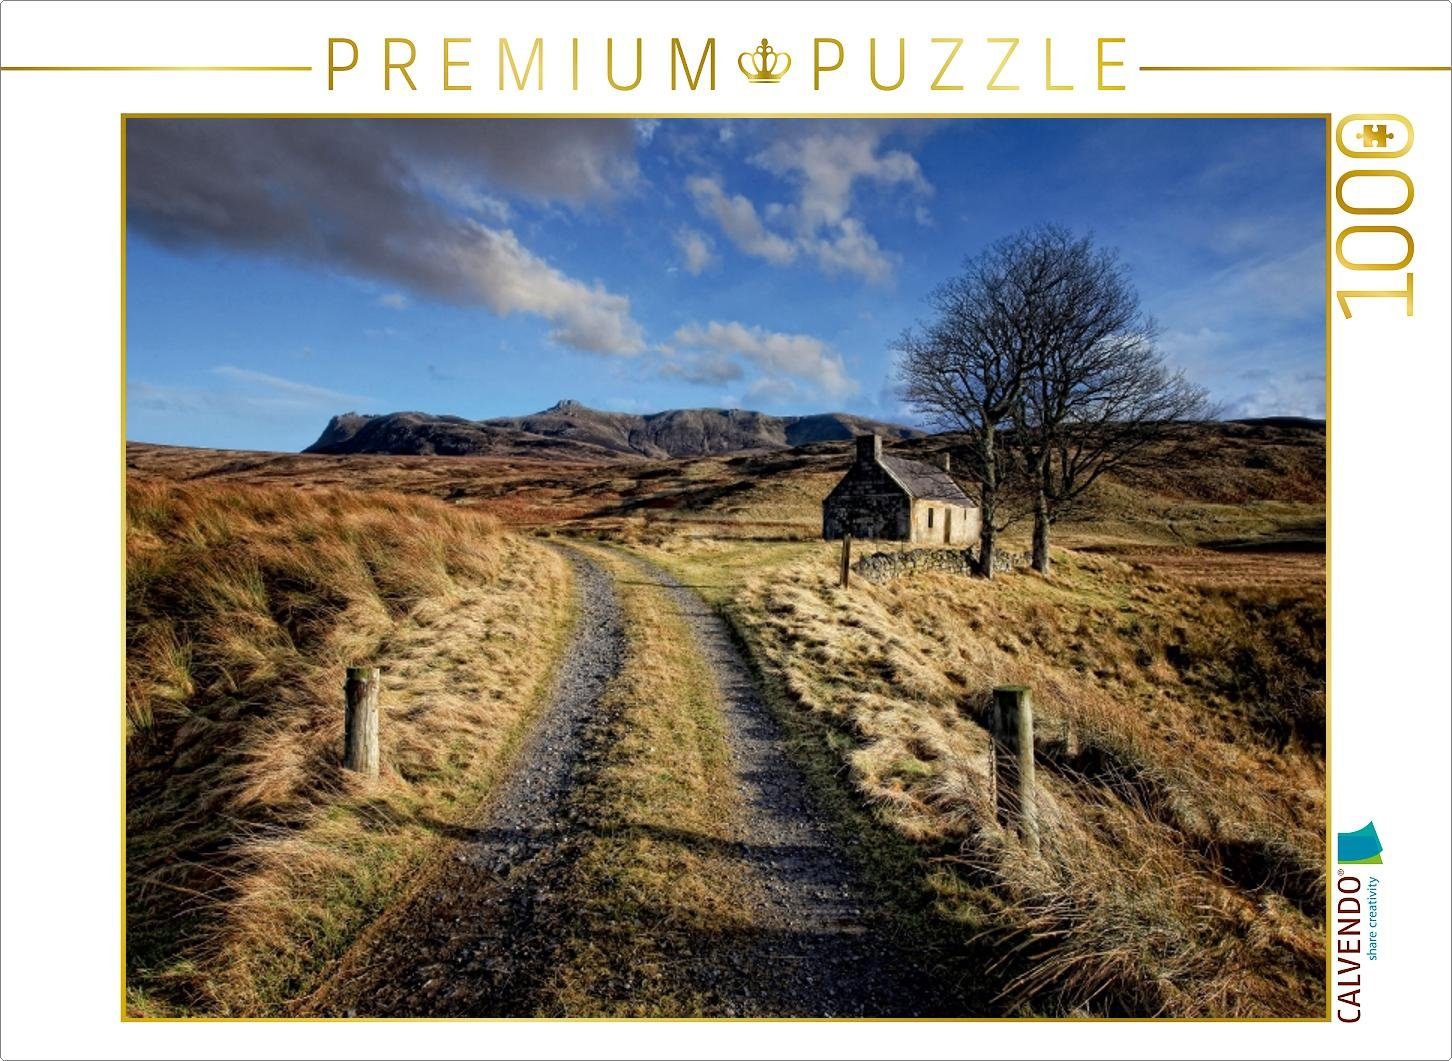 Foto-Puzzle Lege-Größe 64 Puzzle Schottland Teile Sutherland, Martina x 48 Hope, Bild Puzzle 1000 CALVENDO Puzzleteile Cross, CALVENDO Ben von cm 1000